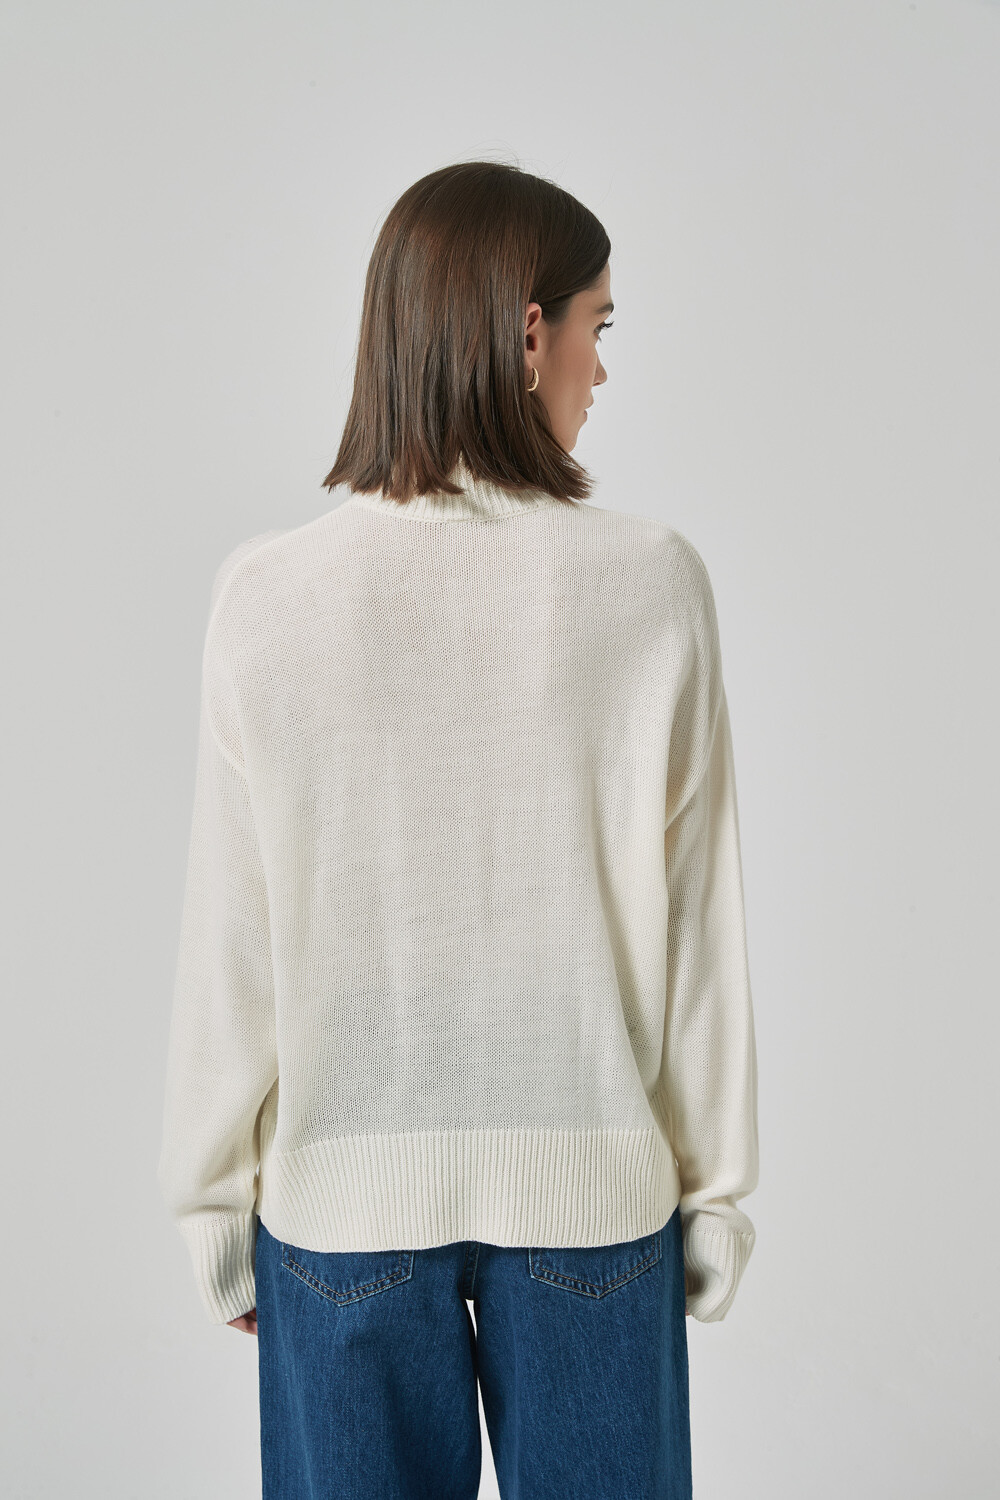 Sweater Noak Crudo / Natural